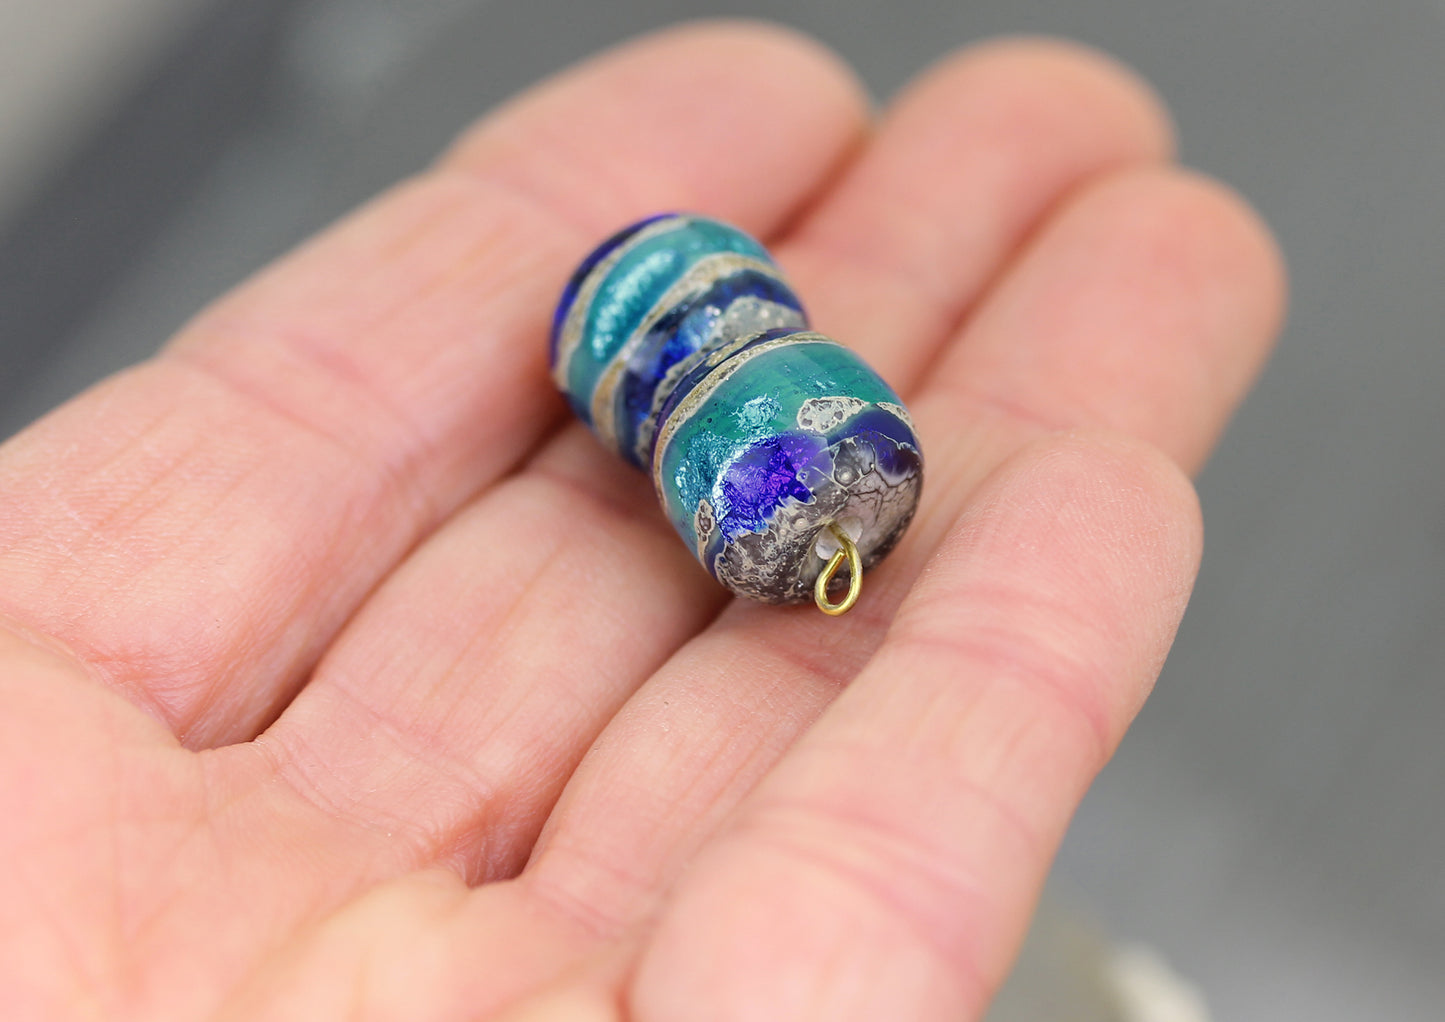 #124028 - Turquoise/Cobalt Sea Rocks ombré bead pair